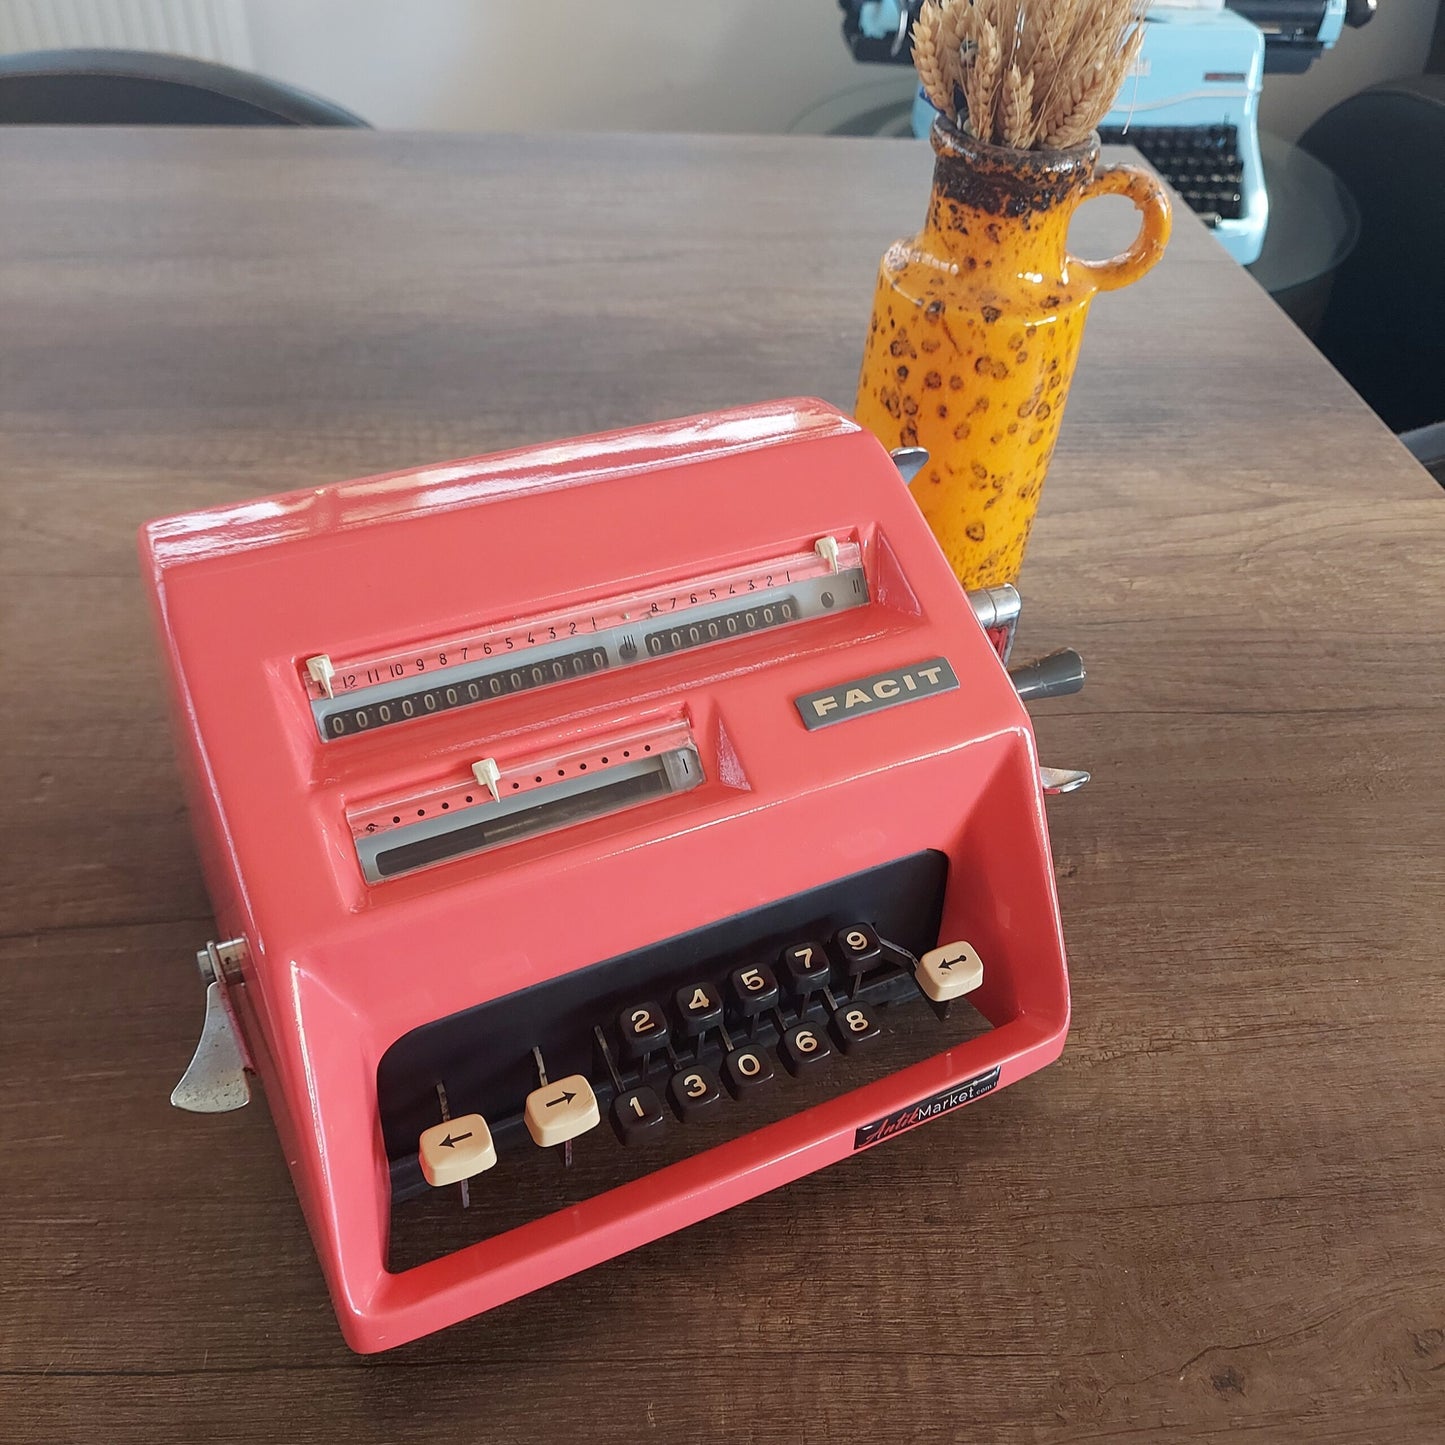 Facit Legend Calculator 1965 model. Working in Pink Color